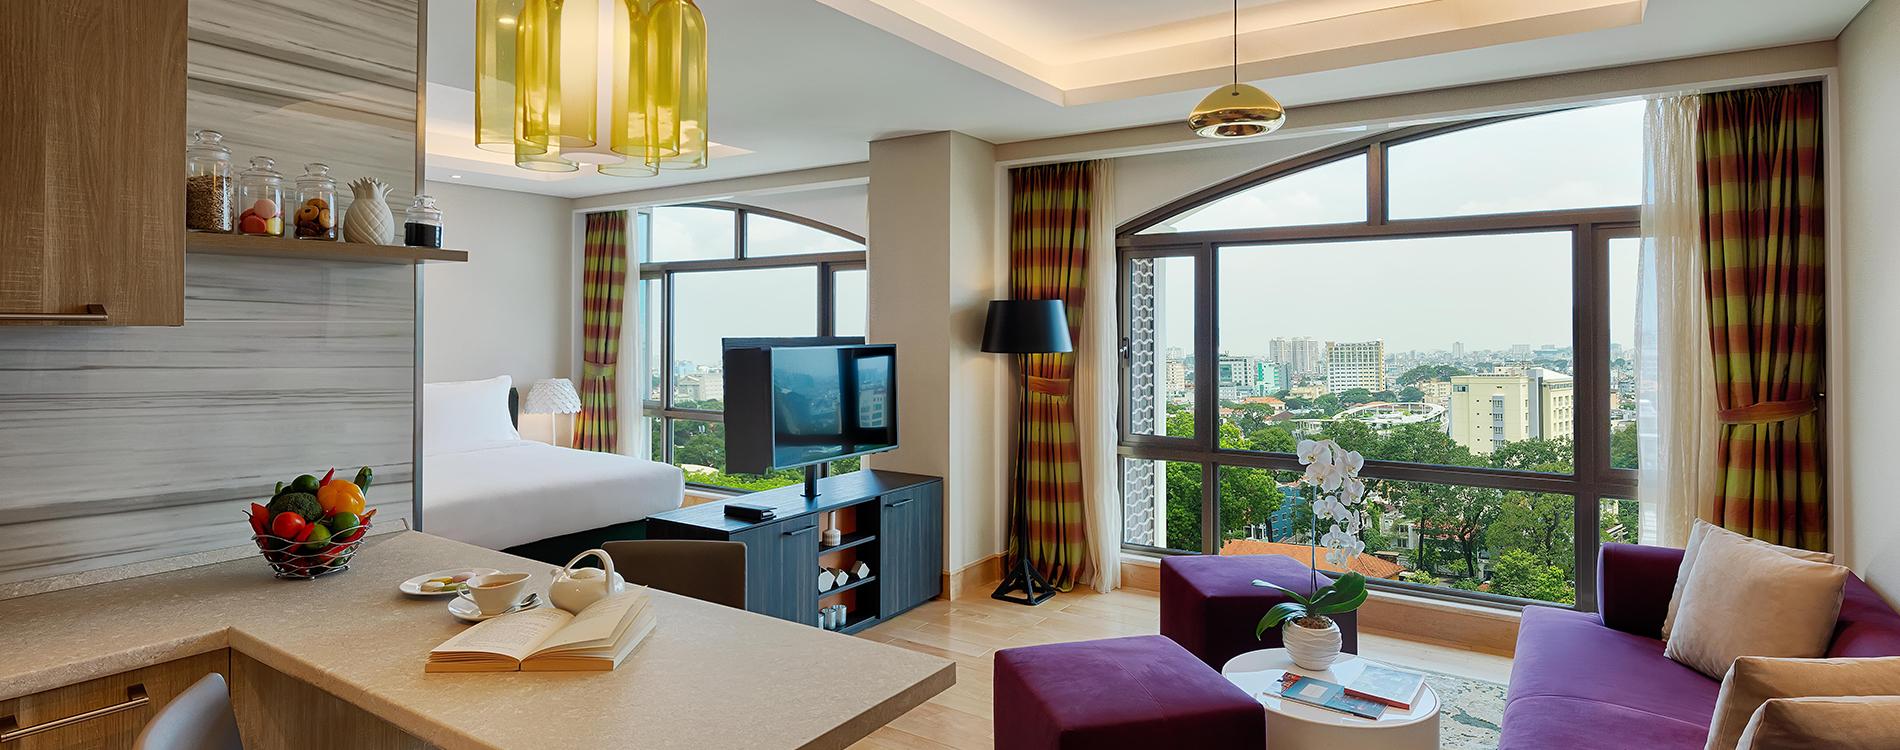 Sherwood Suites Resort from $59. Antalya Hotel Deals & Reviews - KAYAK